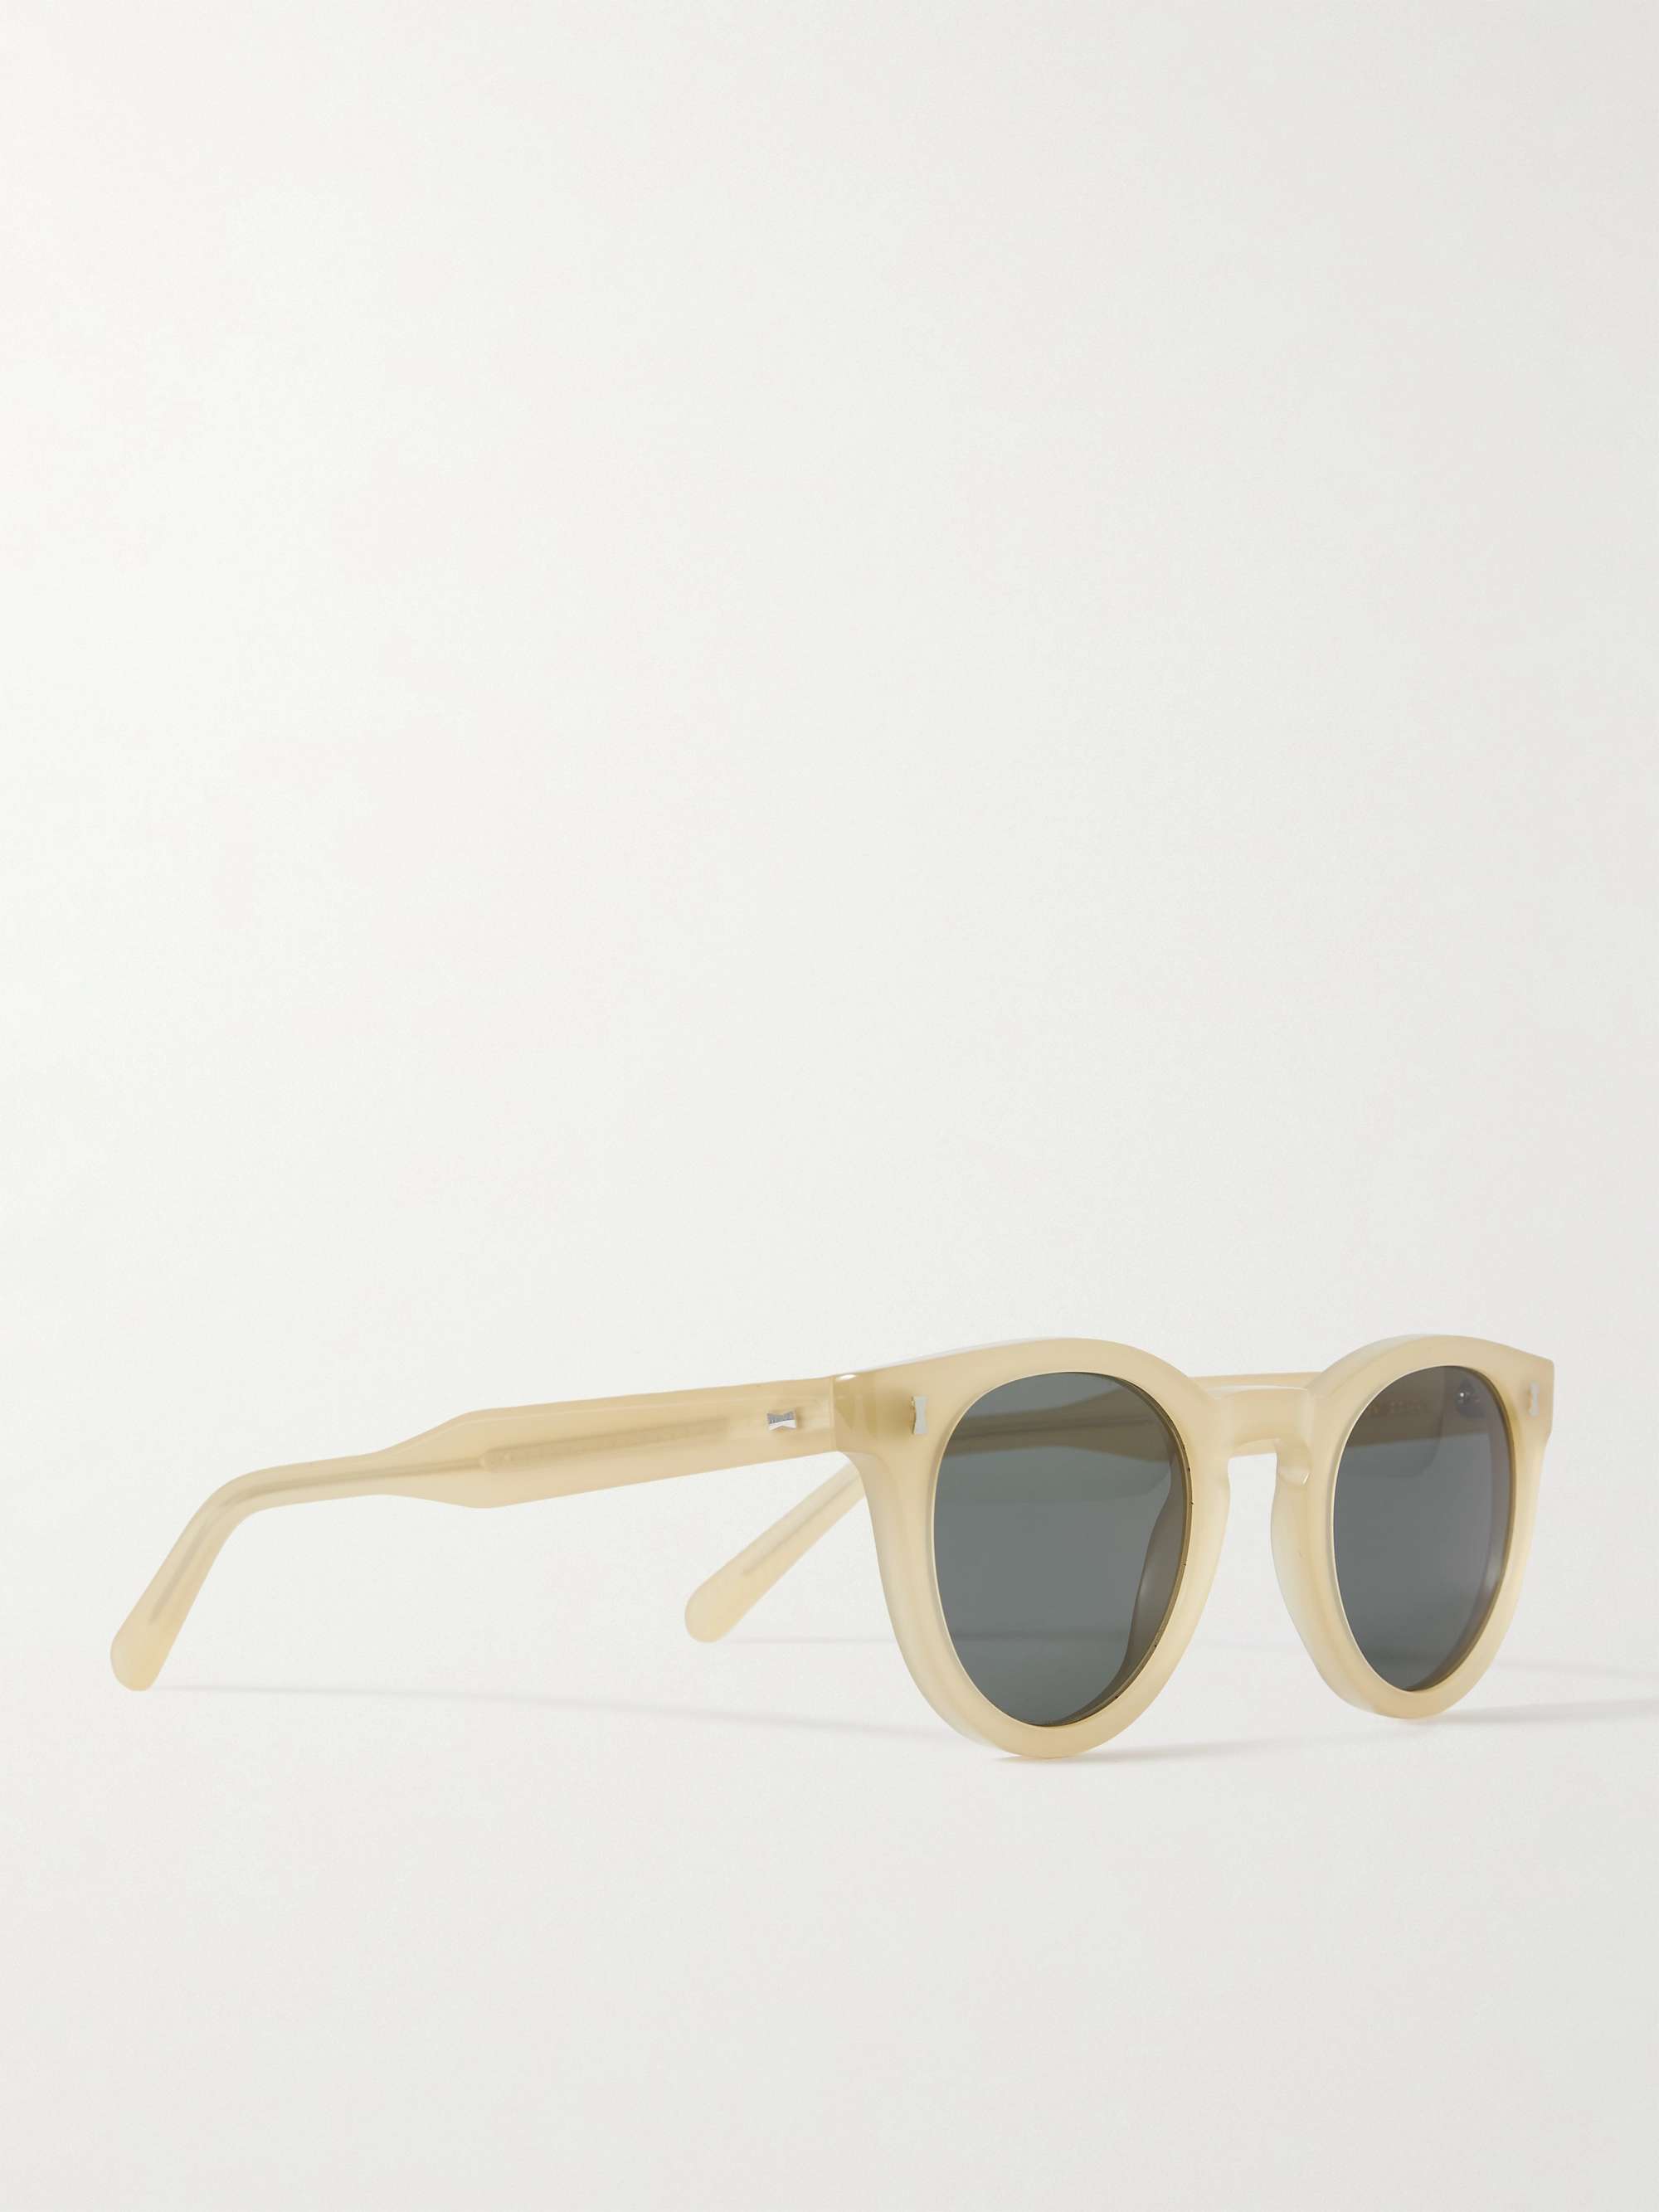 MR P. + Cubitts Herbrand Round-Frame Tortoiseshell Acetate Sunglasses